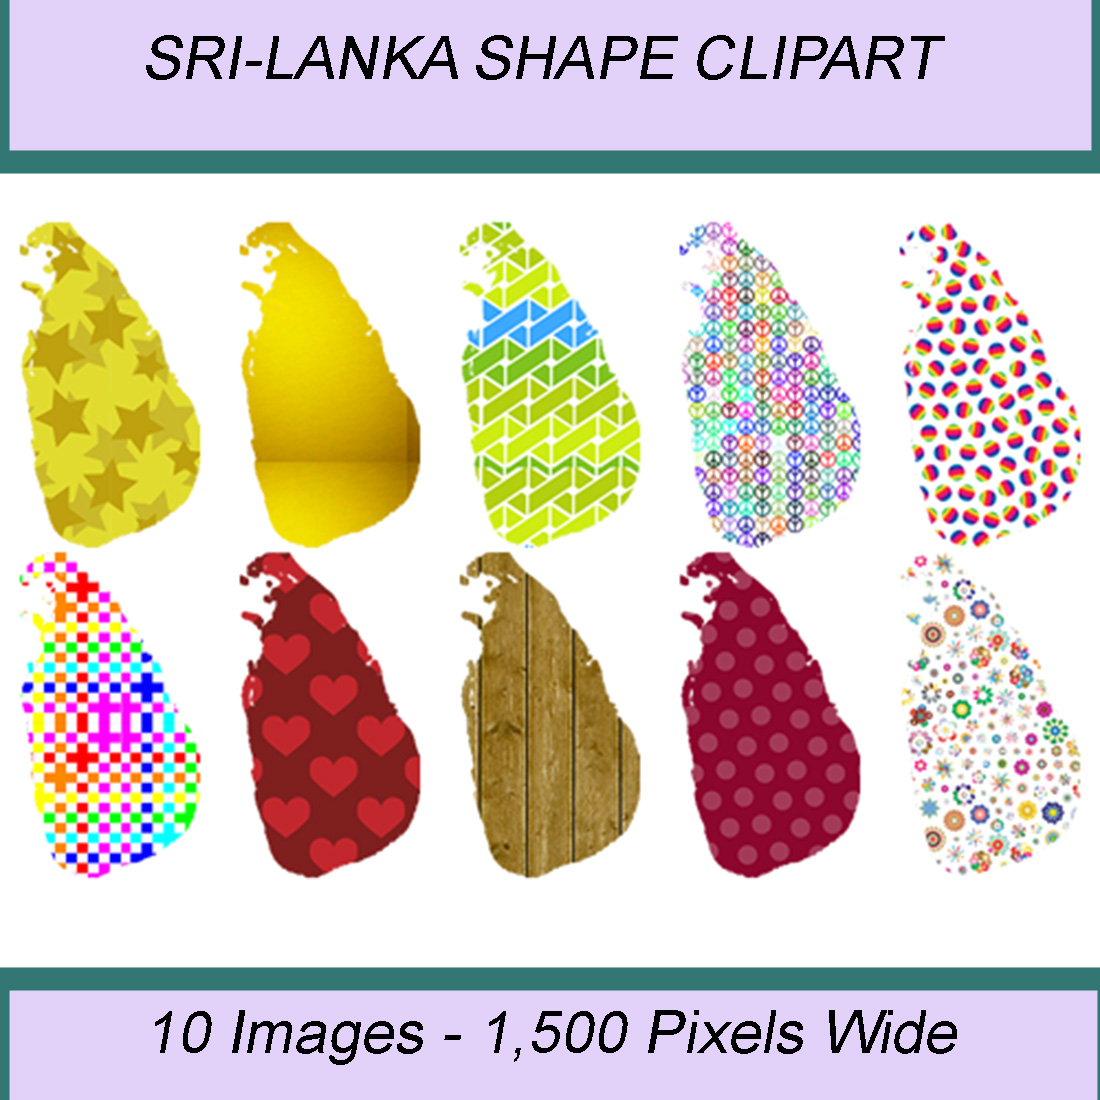 SRI-LANKA SHAPE CLIPART ICONS cover image.